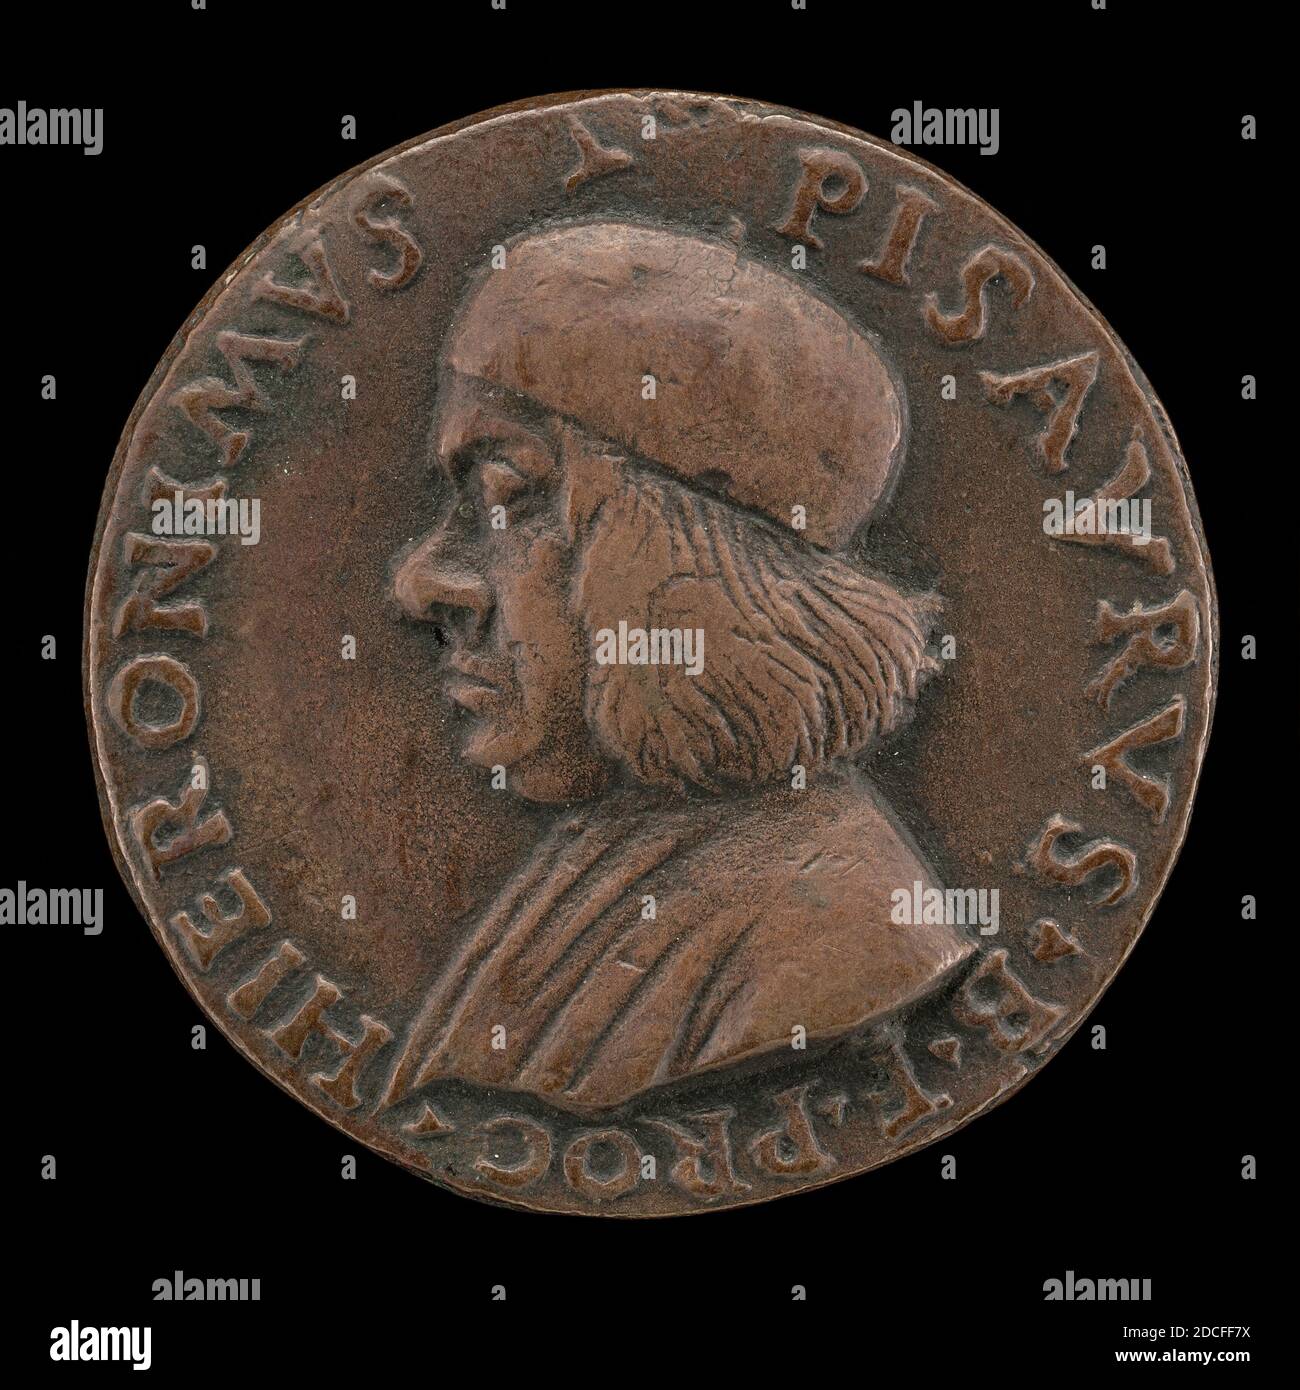 Paduan 16th Century, (artist), Girolamo di Benedetto Pesaro, Captain of Padua 1515, c. 1515, bronze, overall (diameter): 3.2 cm (1 1/4 in.), gross weight: 16.15 gr (0.036 lb.), axis: 12:00 Stock Photo